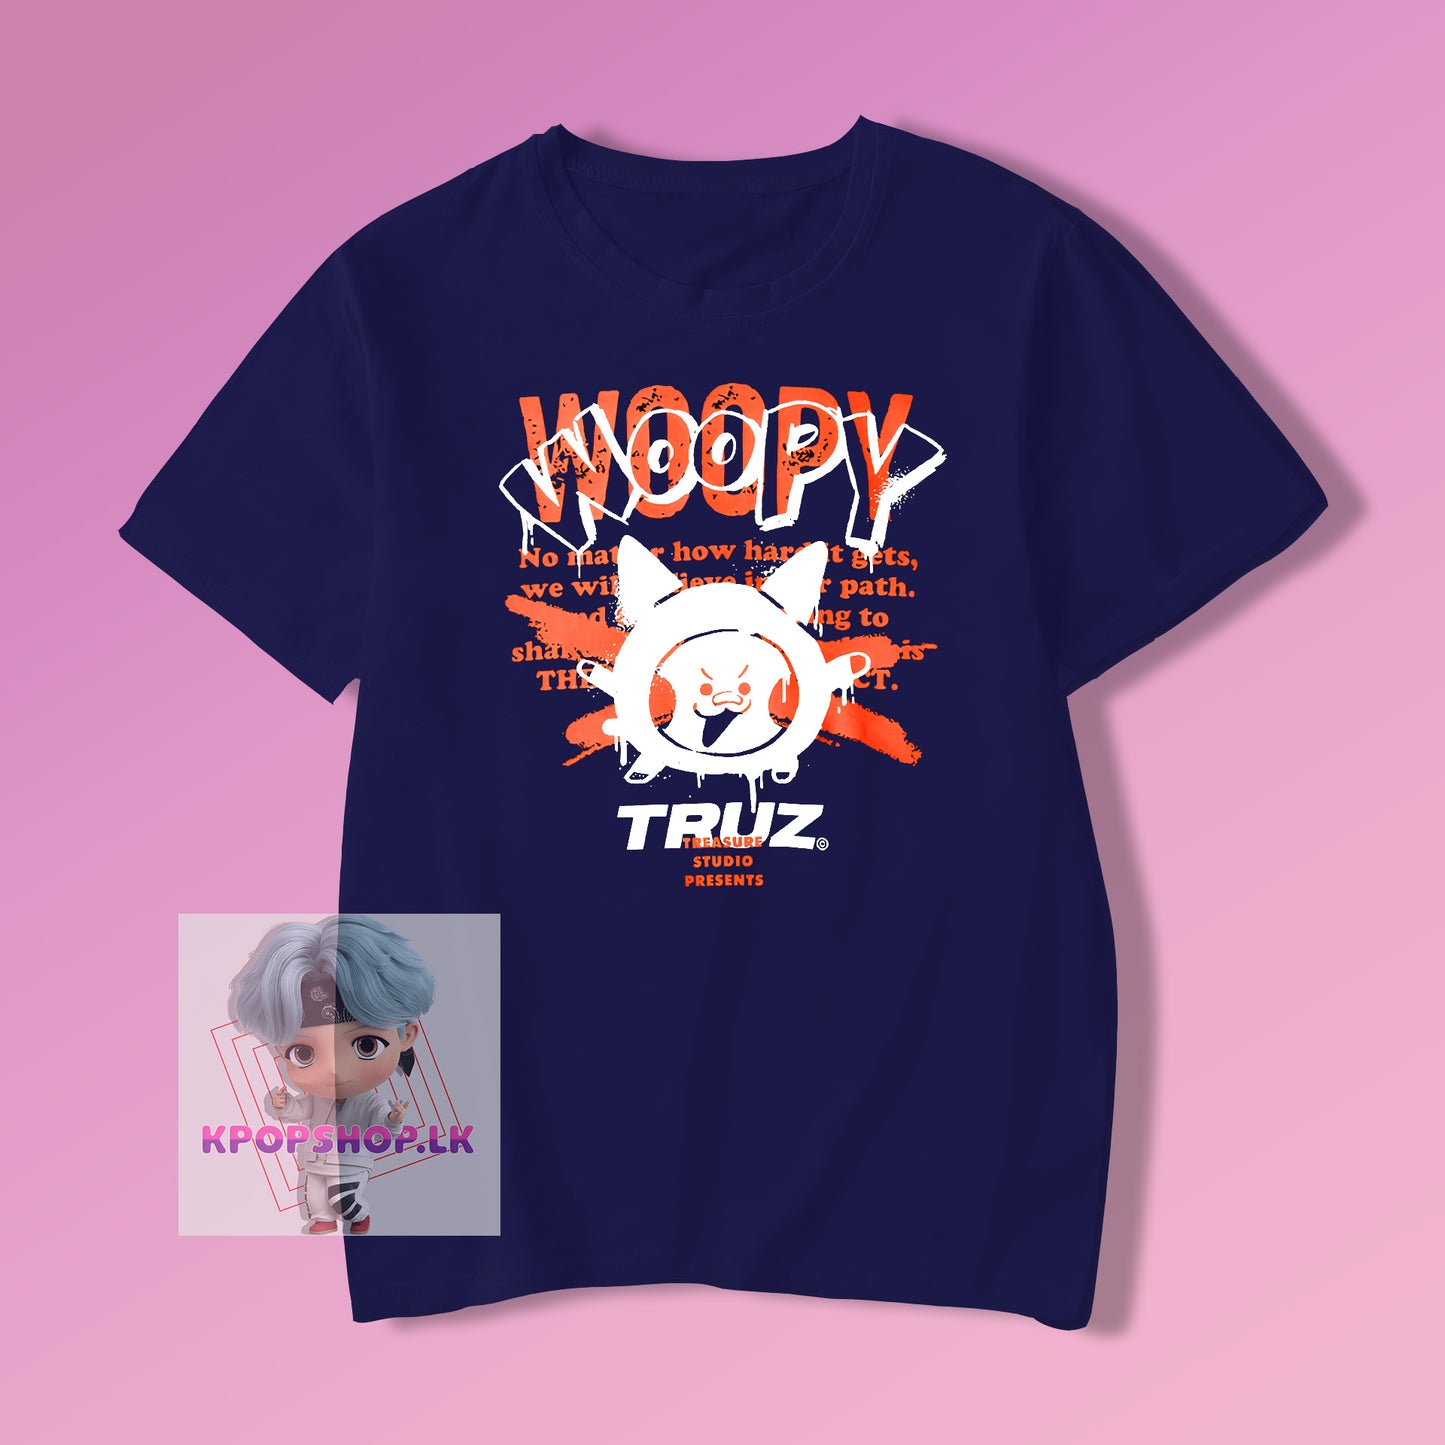 Treasure Woopy Woopy KPOP T-shirt